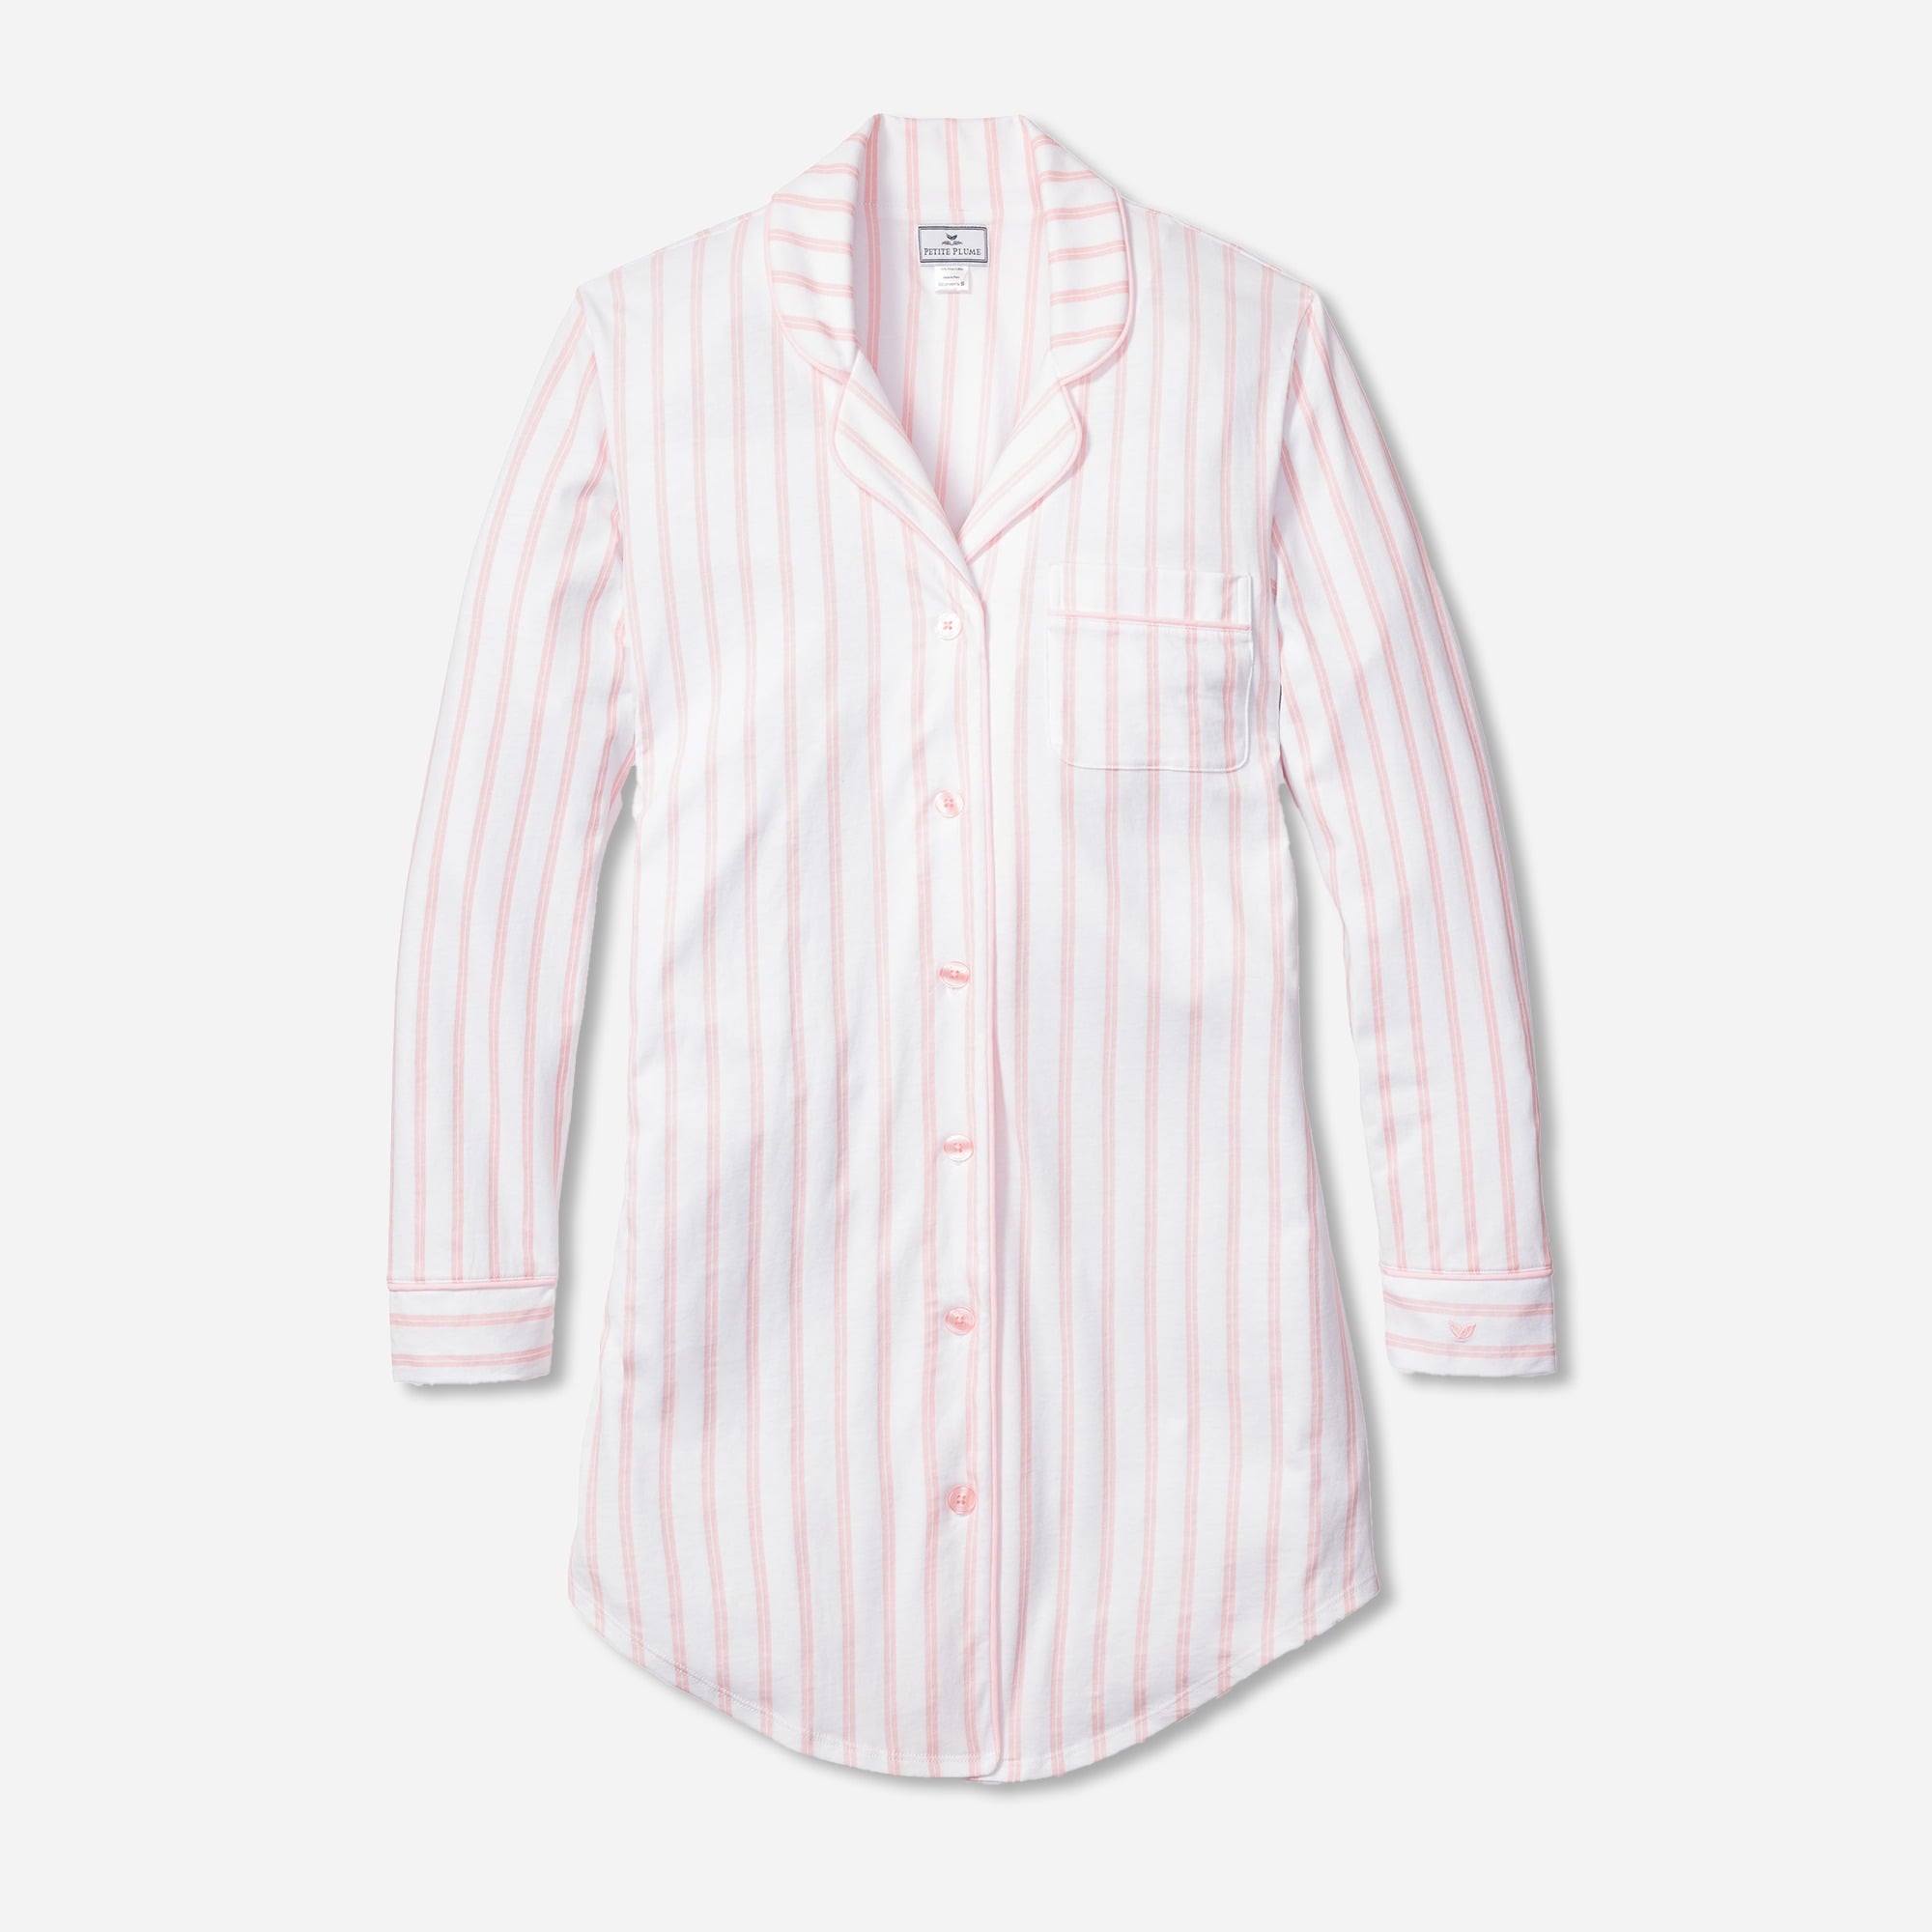 Jcrew Petite Plumeu0026trade; womenu0026apos;s luxe Pima cotton nightshirt in stripe